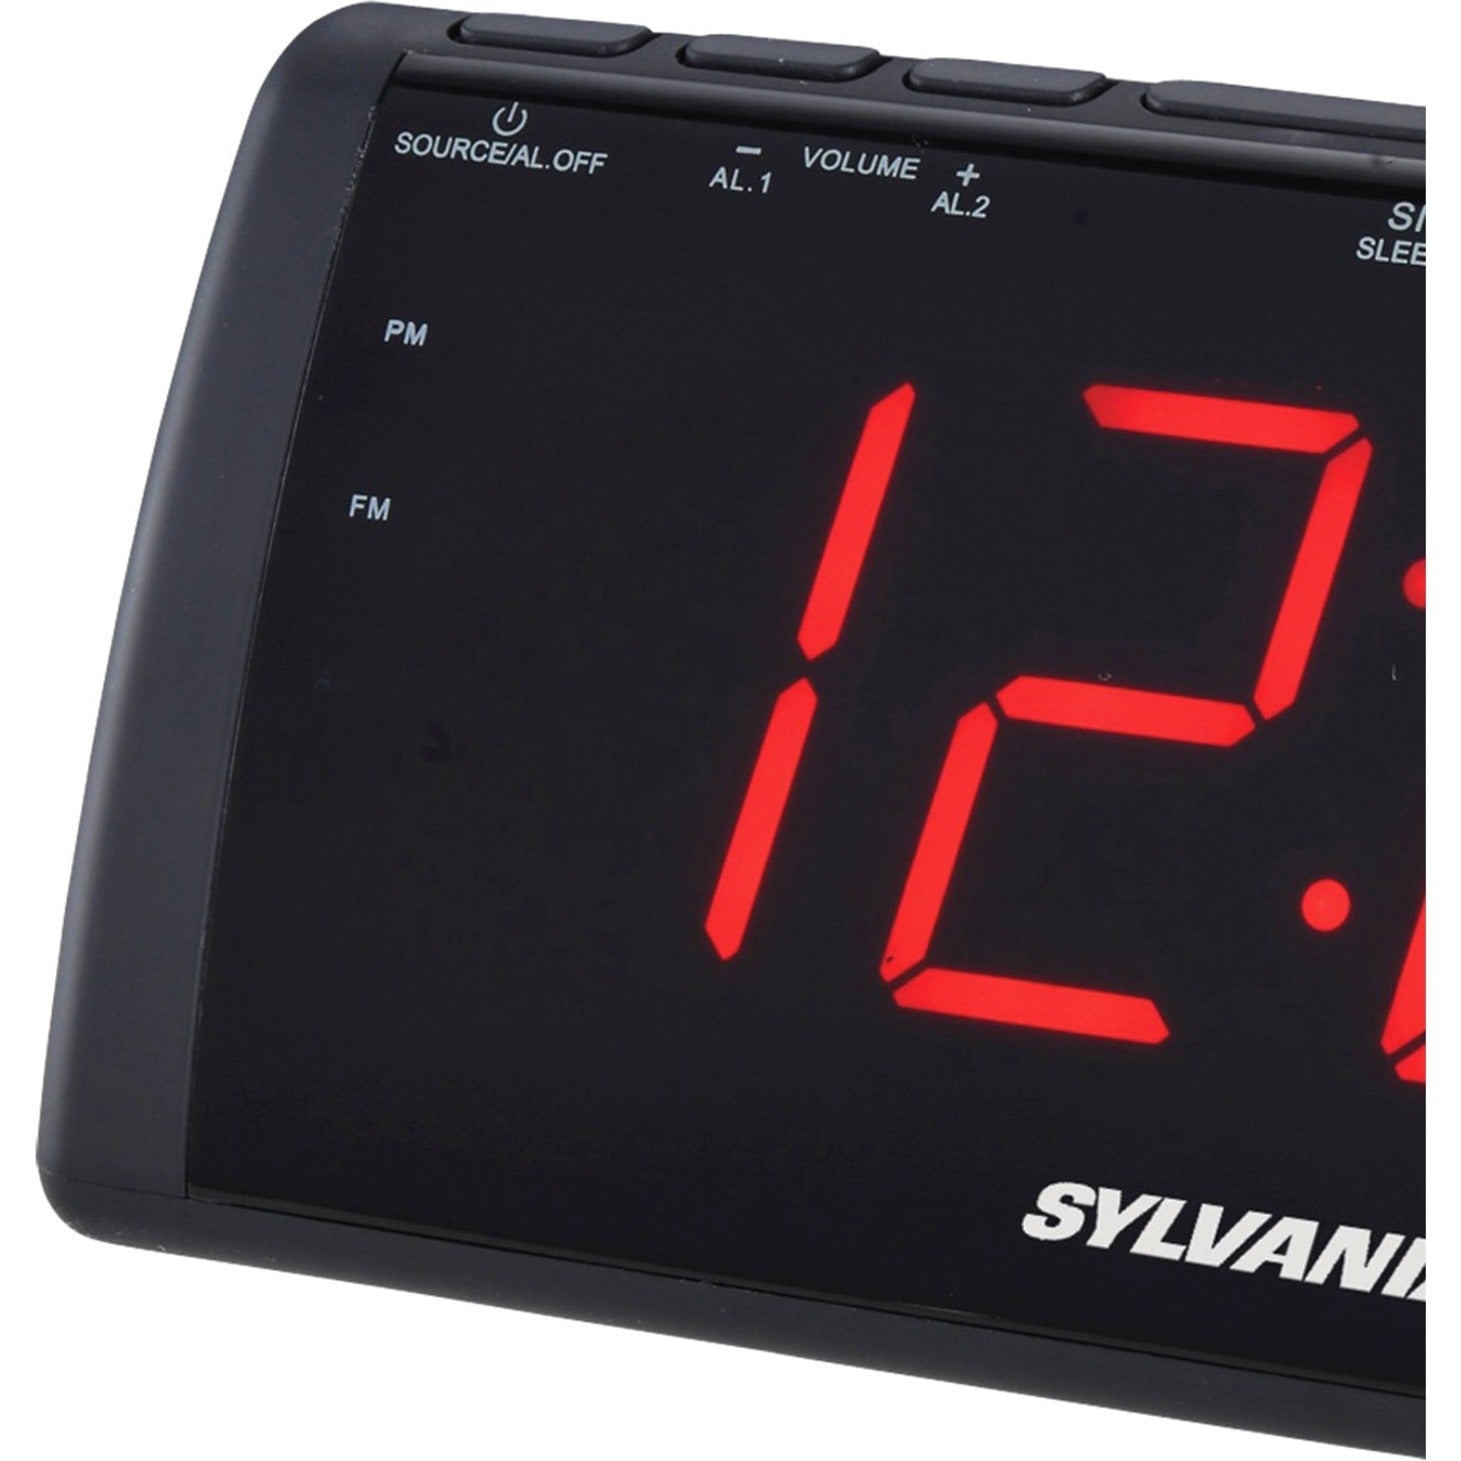 Sylvania SCR1808 Clock Radio - Dual Alarm, AM/FM, USB Charging Port [Discontinued]